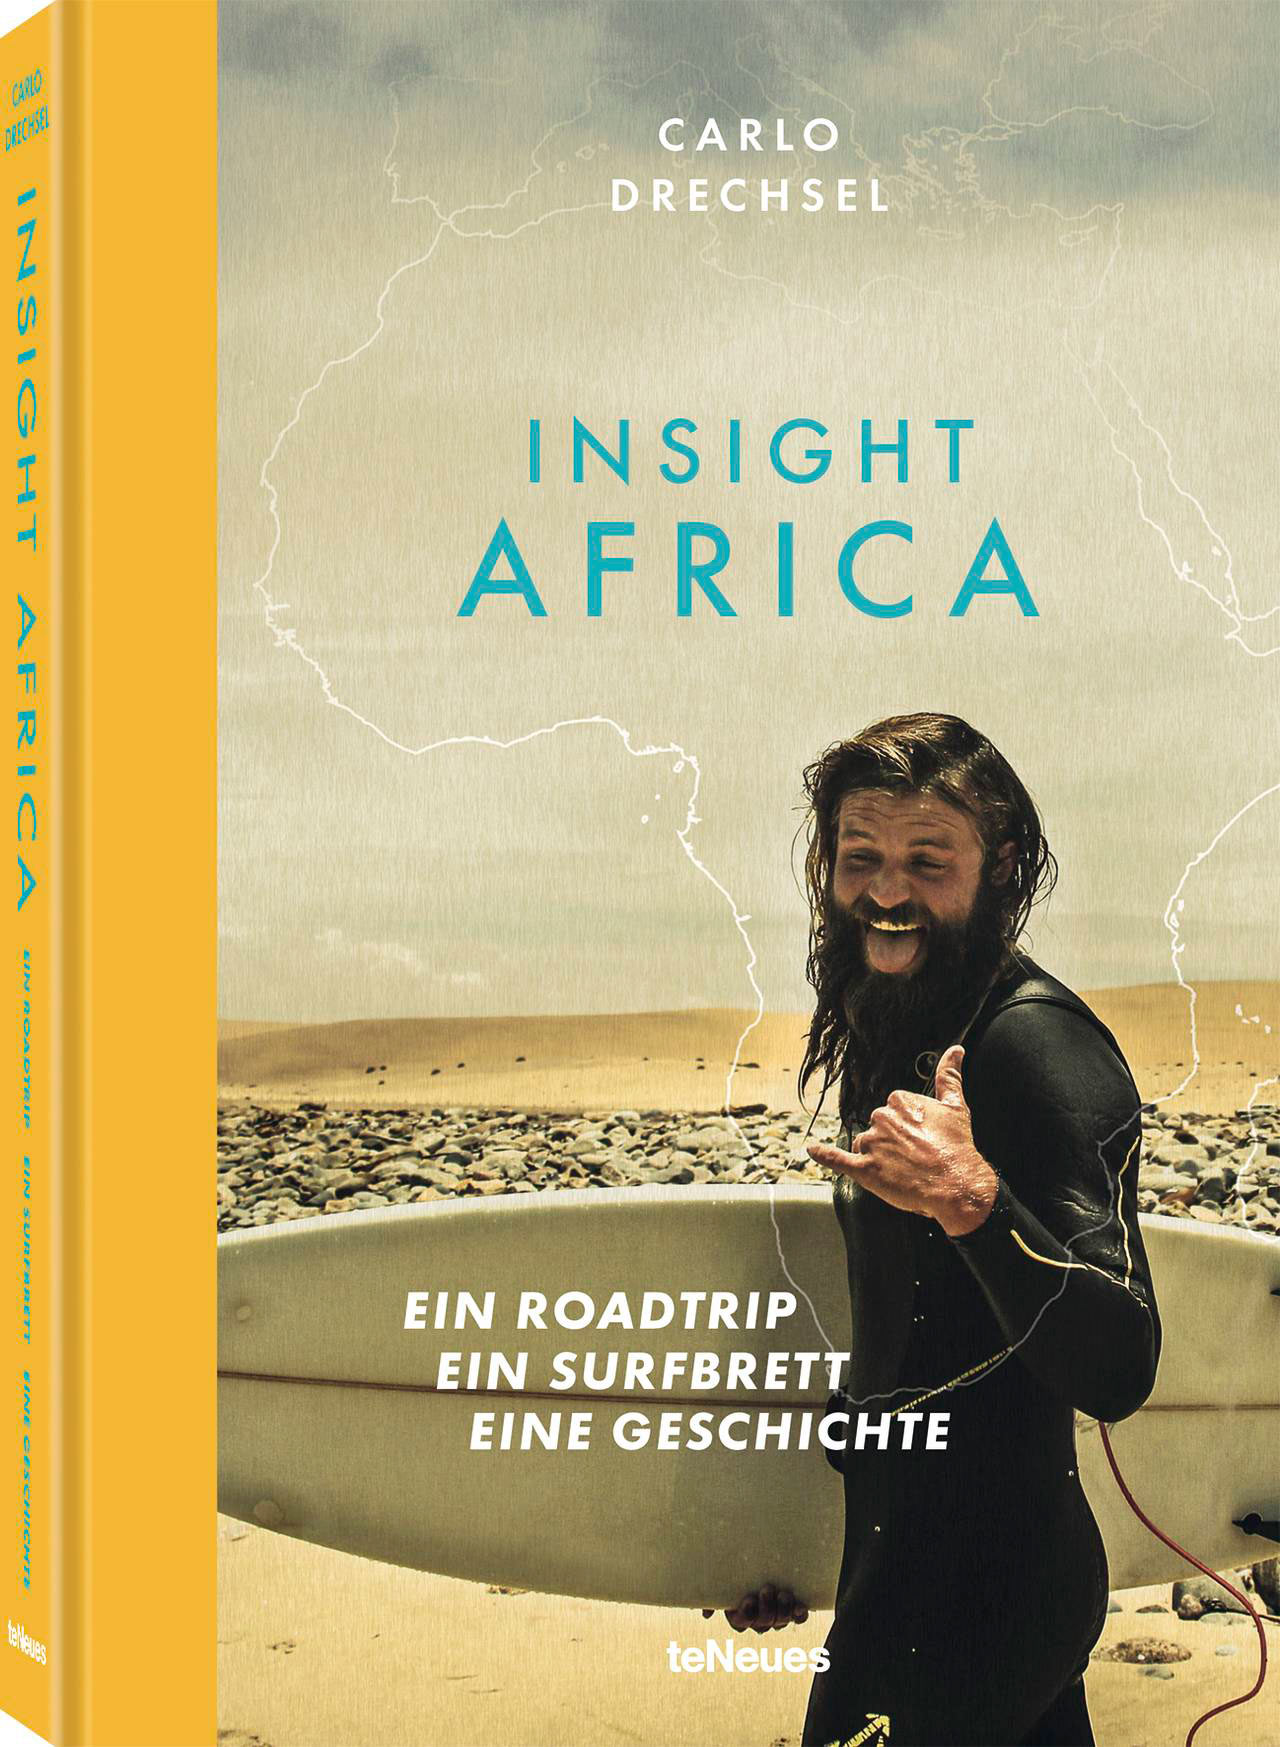 Carlo Drechsel, Insight Africa | © teneues.com